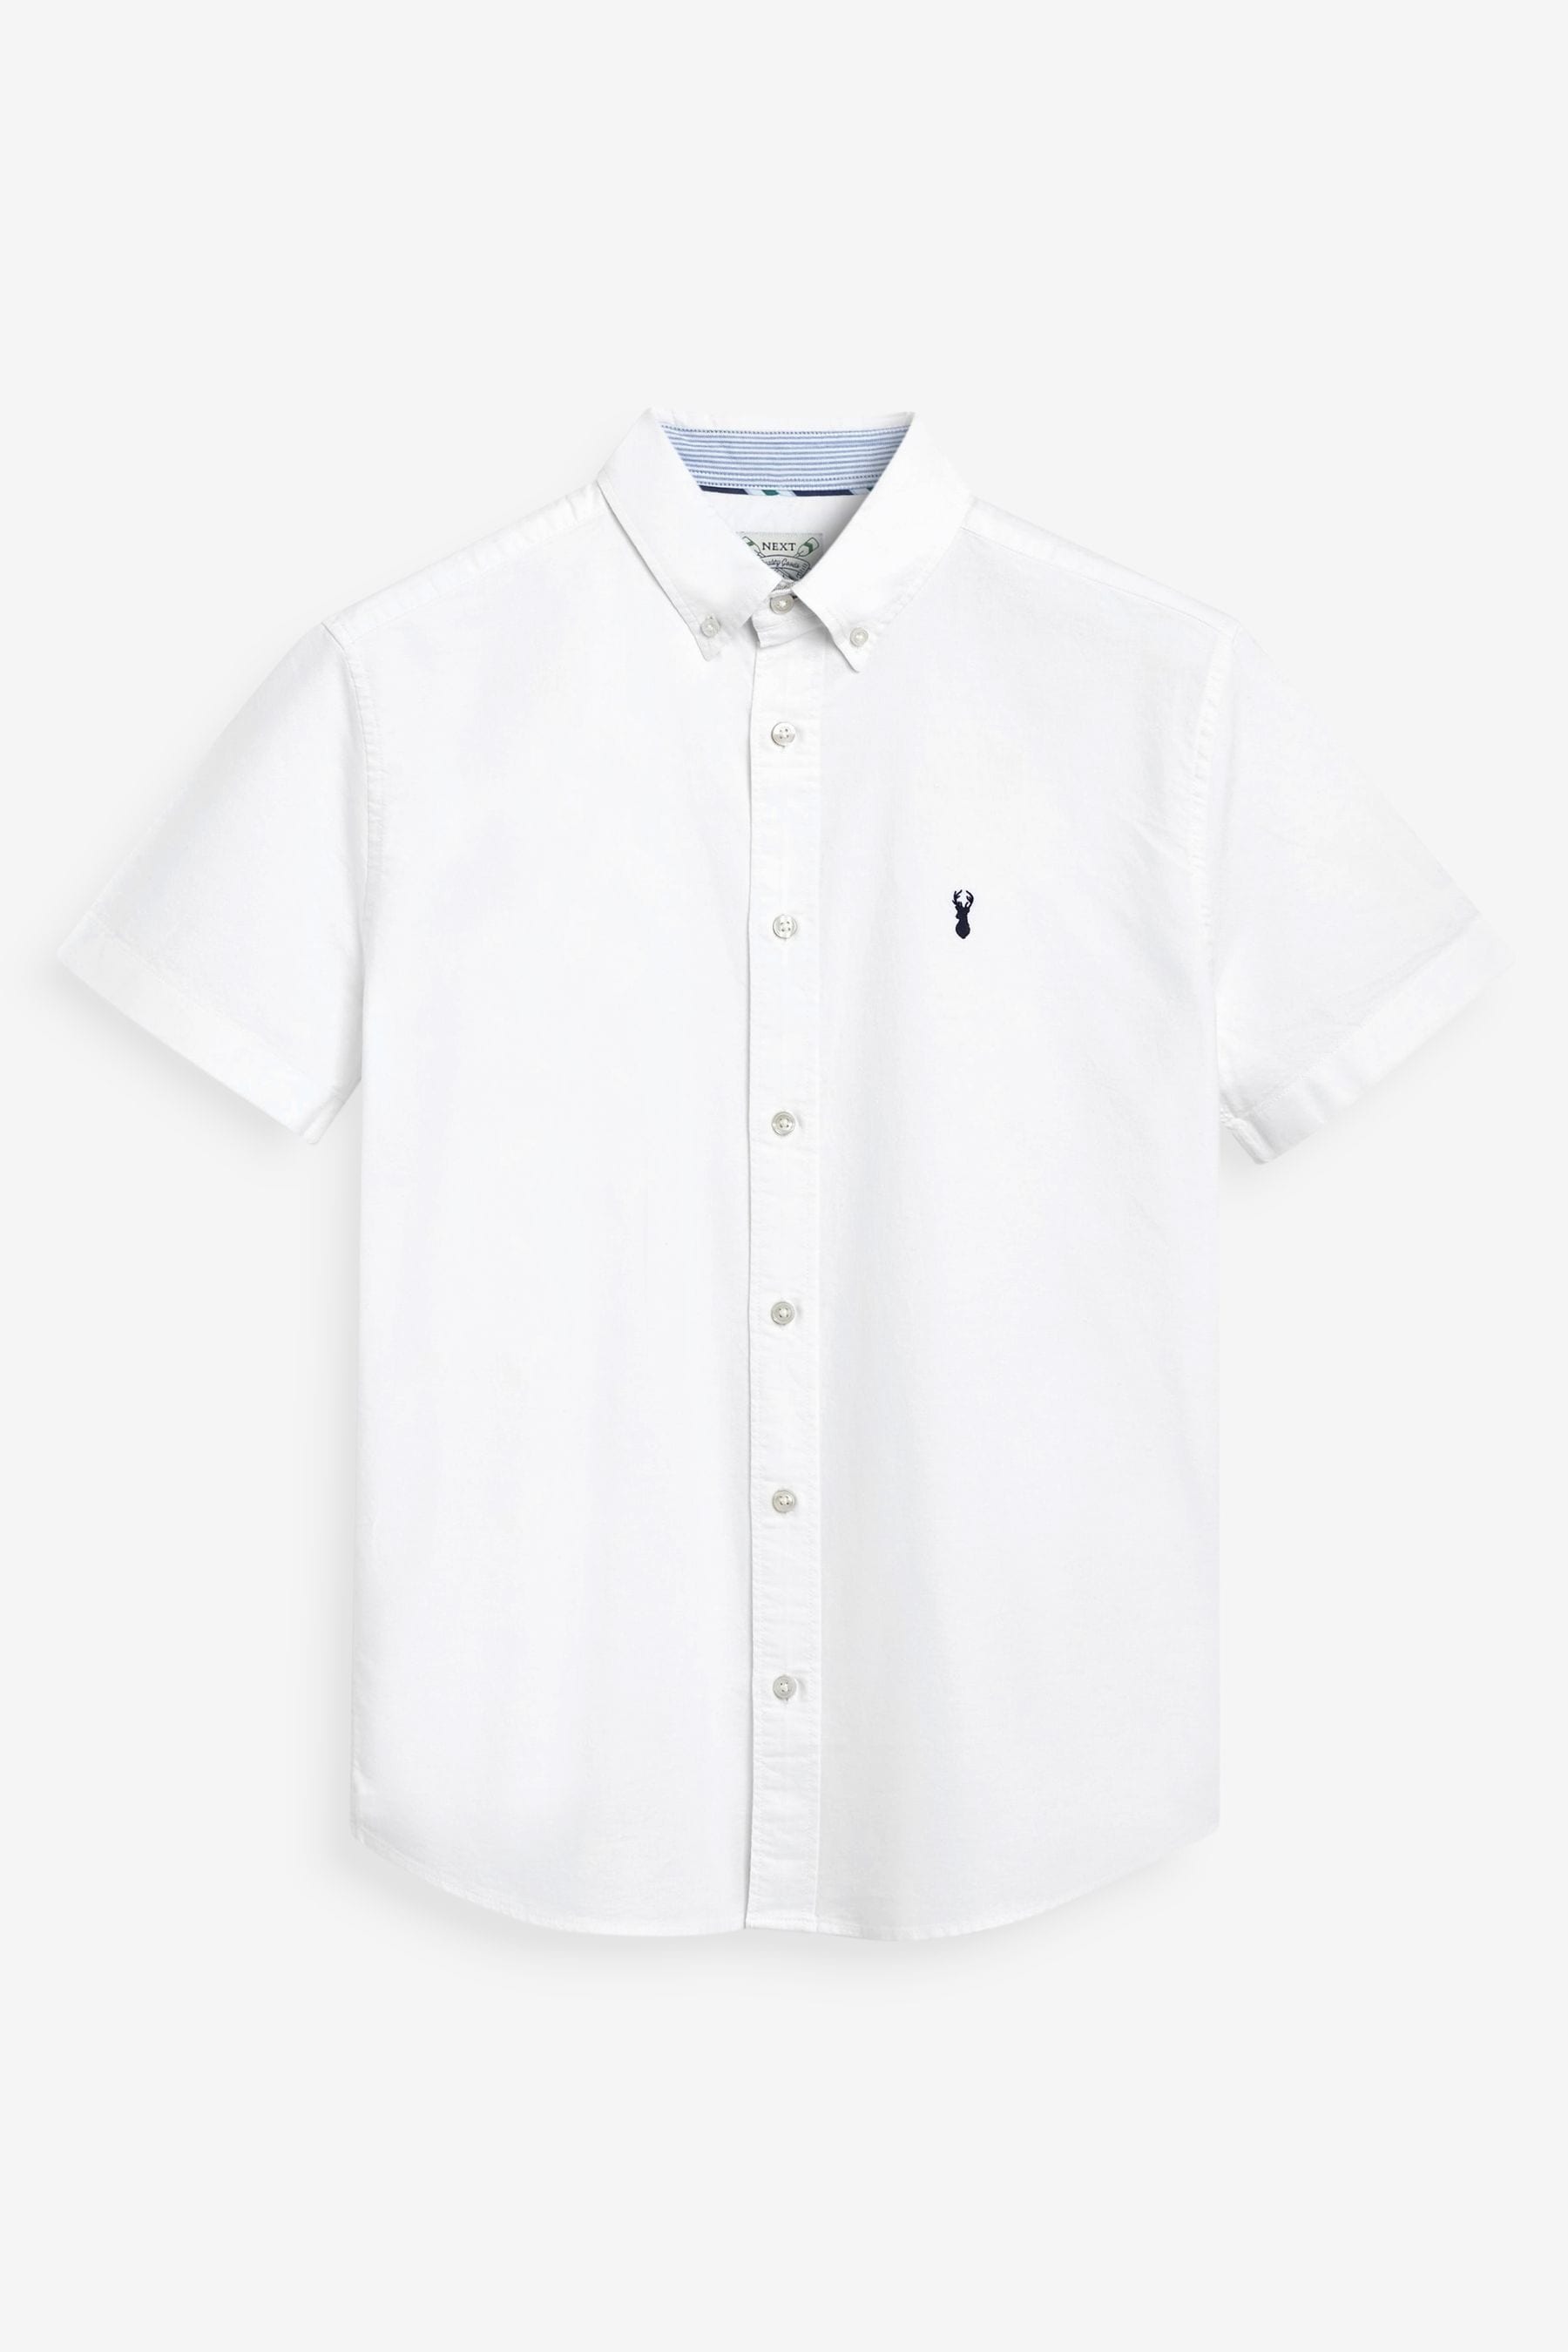 Buy Short Sleeve Oxford Shirt from Next Ireland